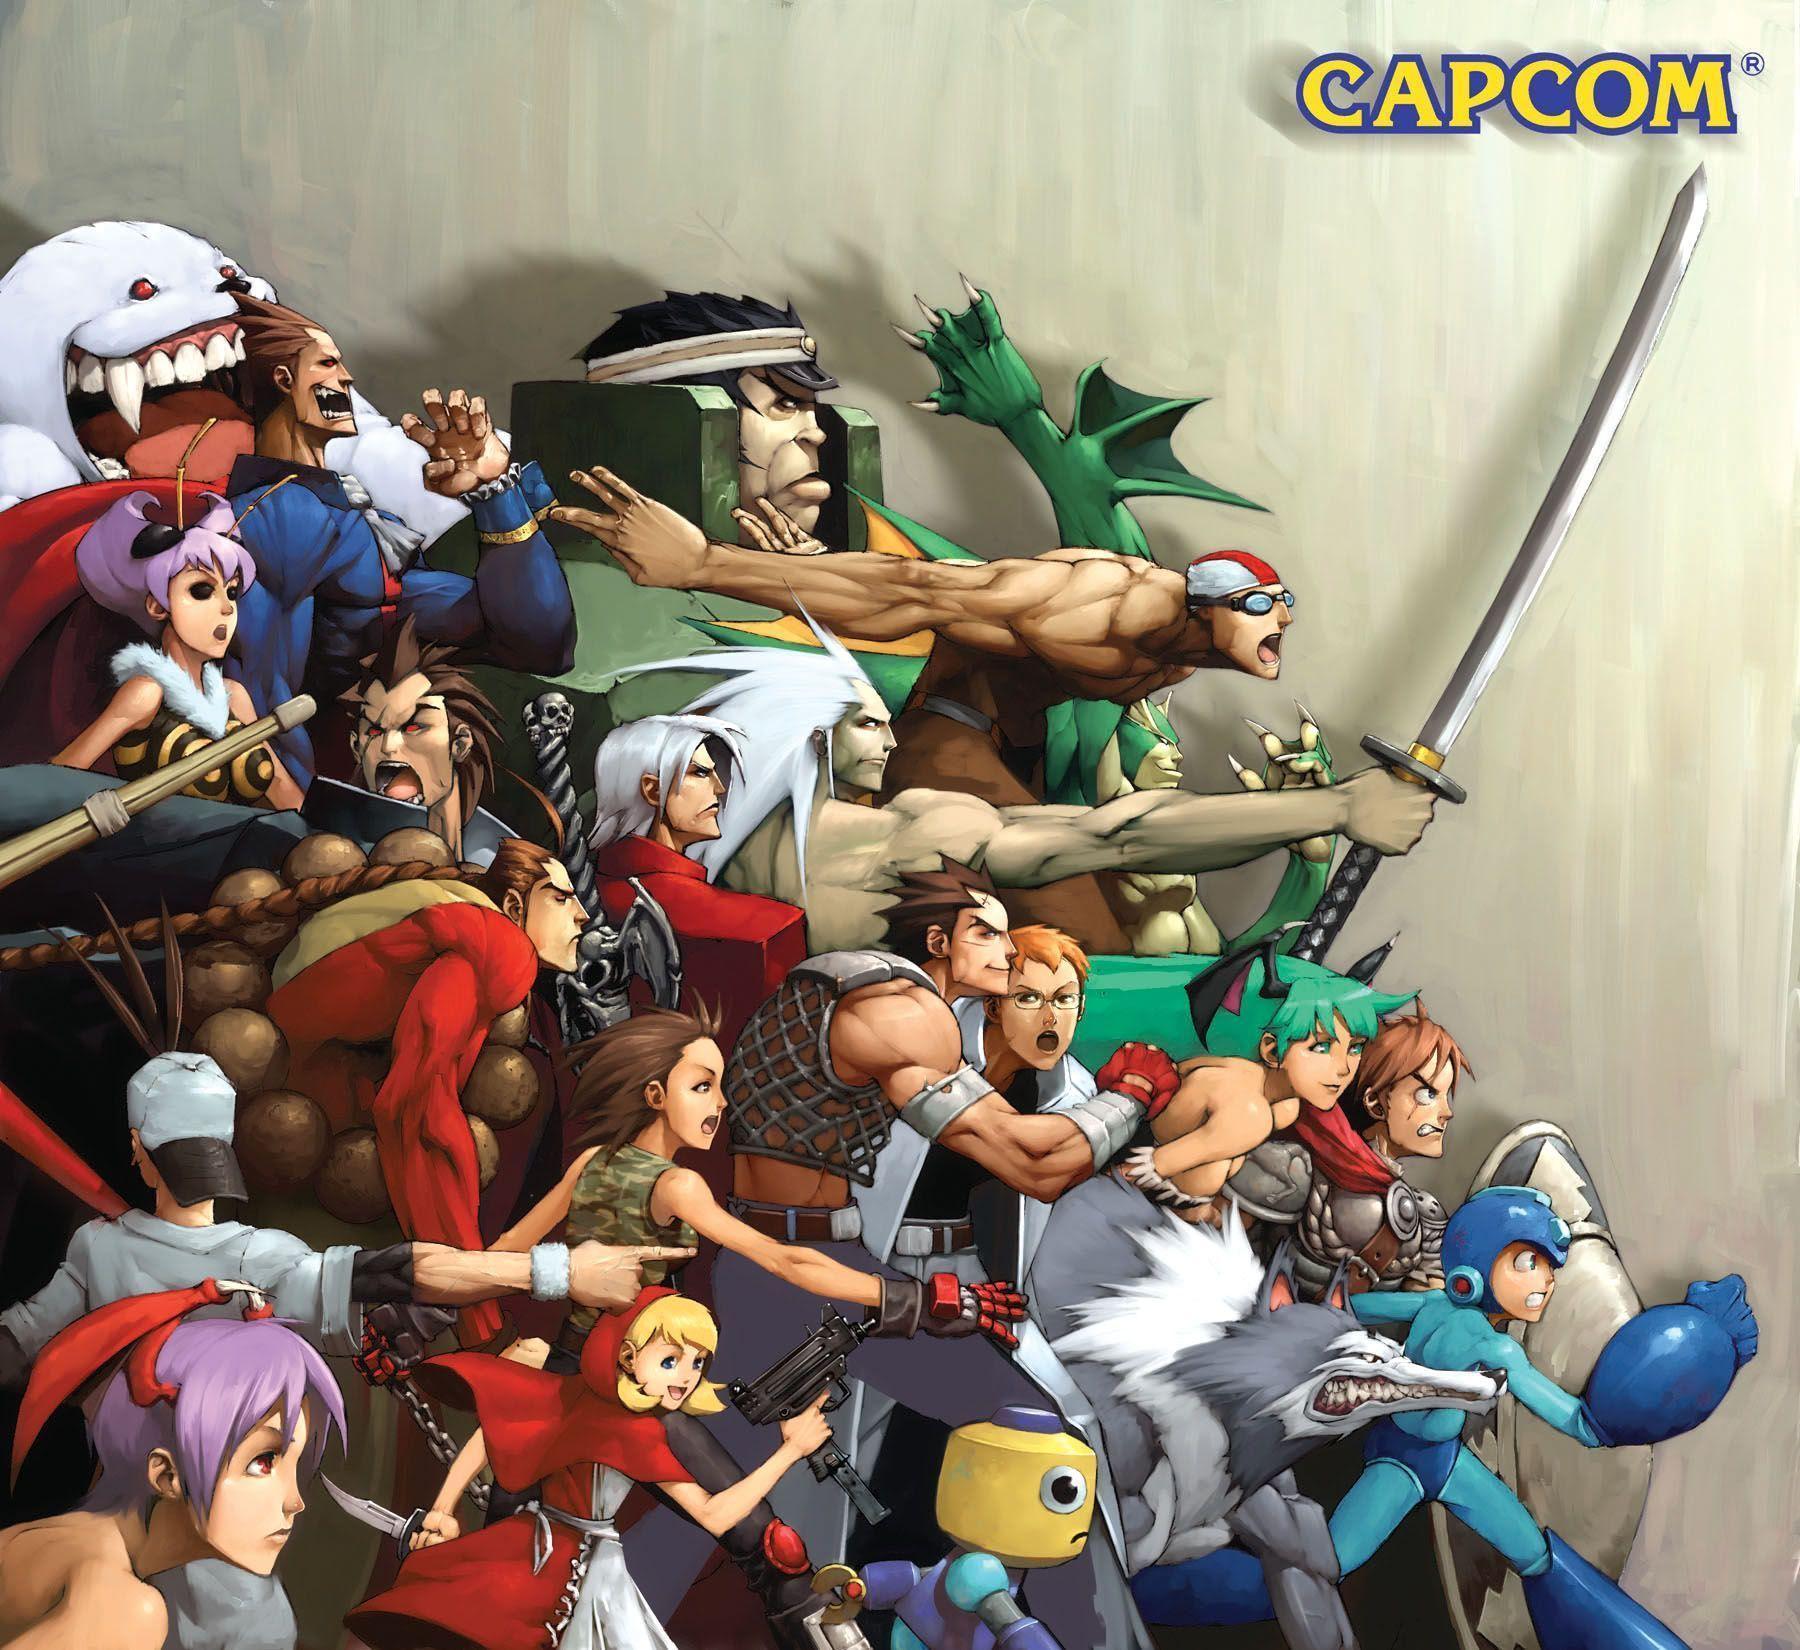 image For > Capcom Characters Wallpaper